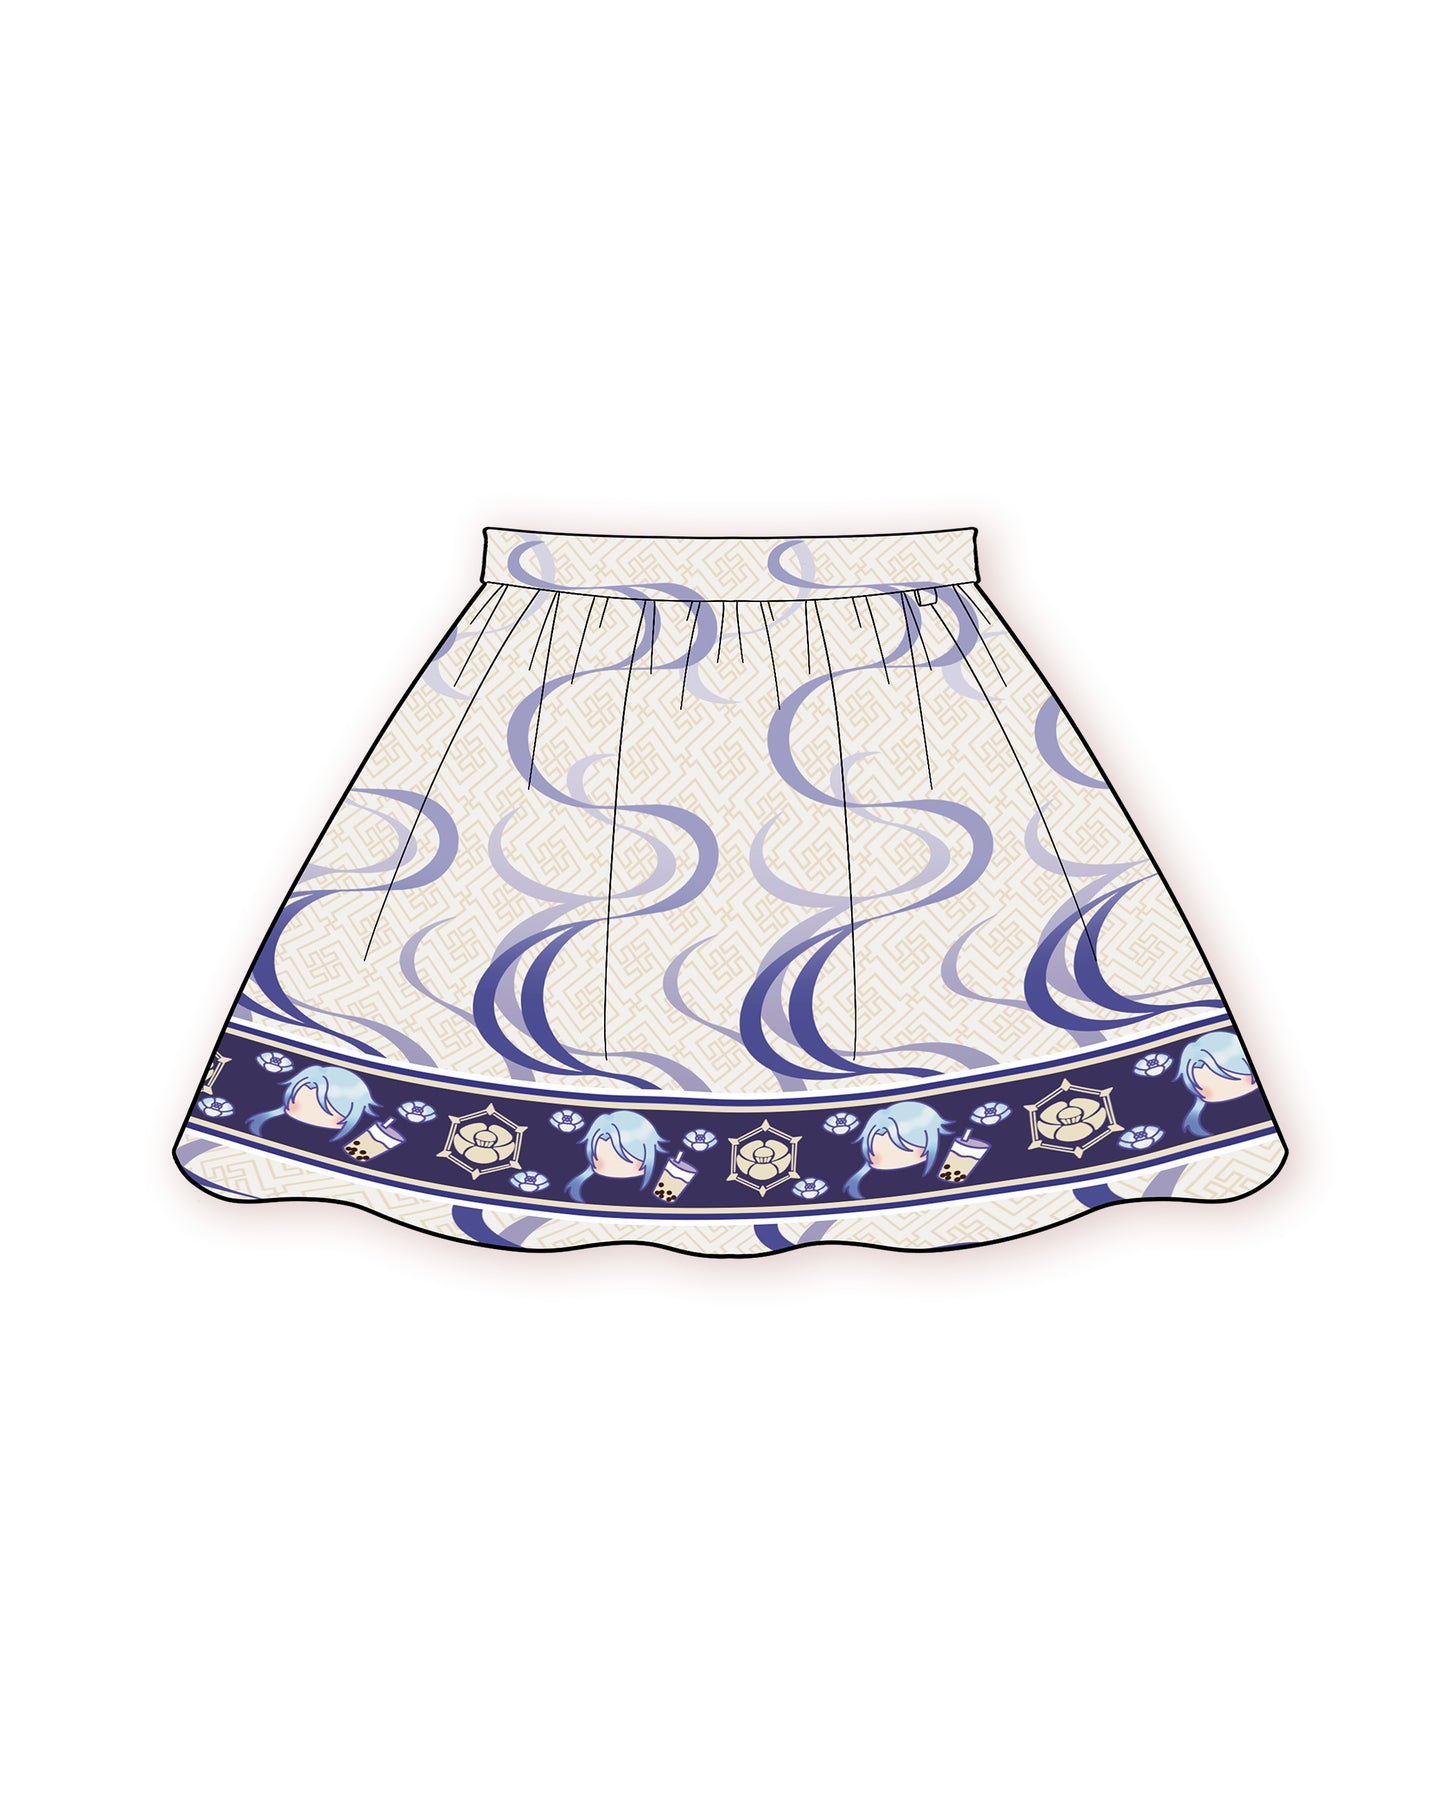 Made to order: Kamisato Ayato Skirt